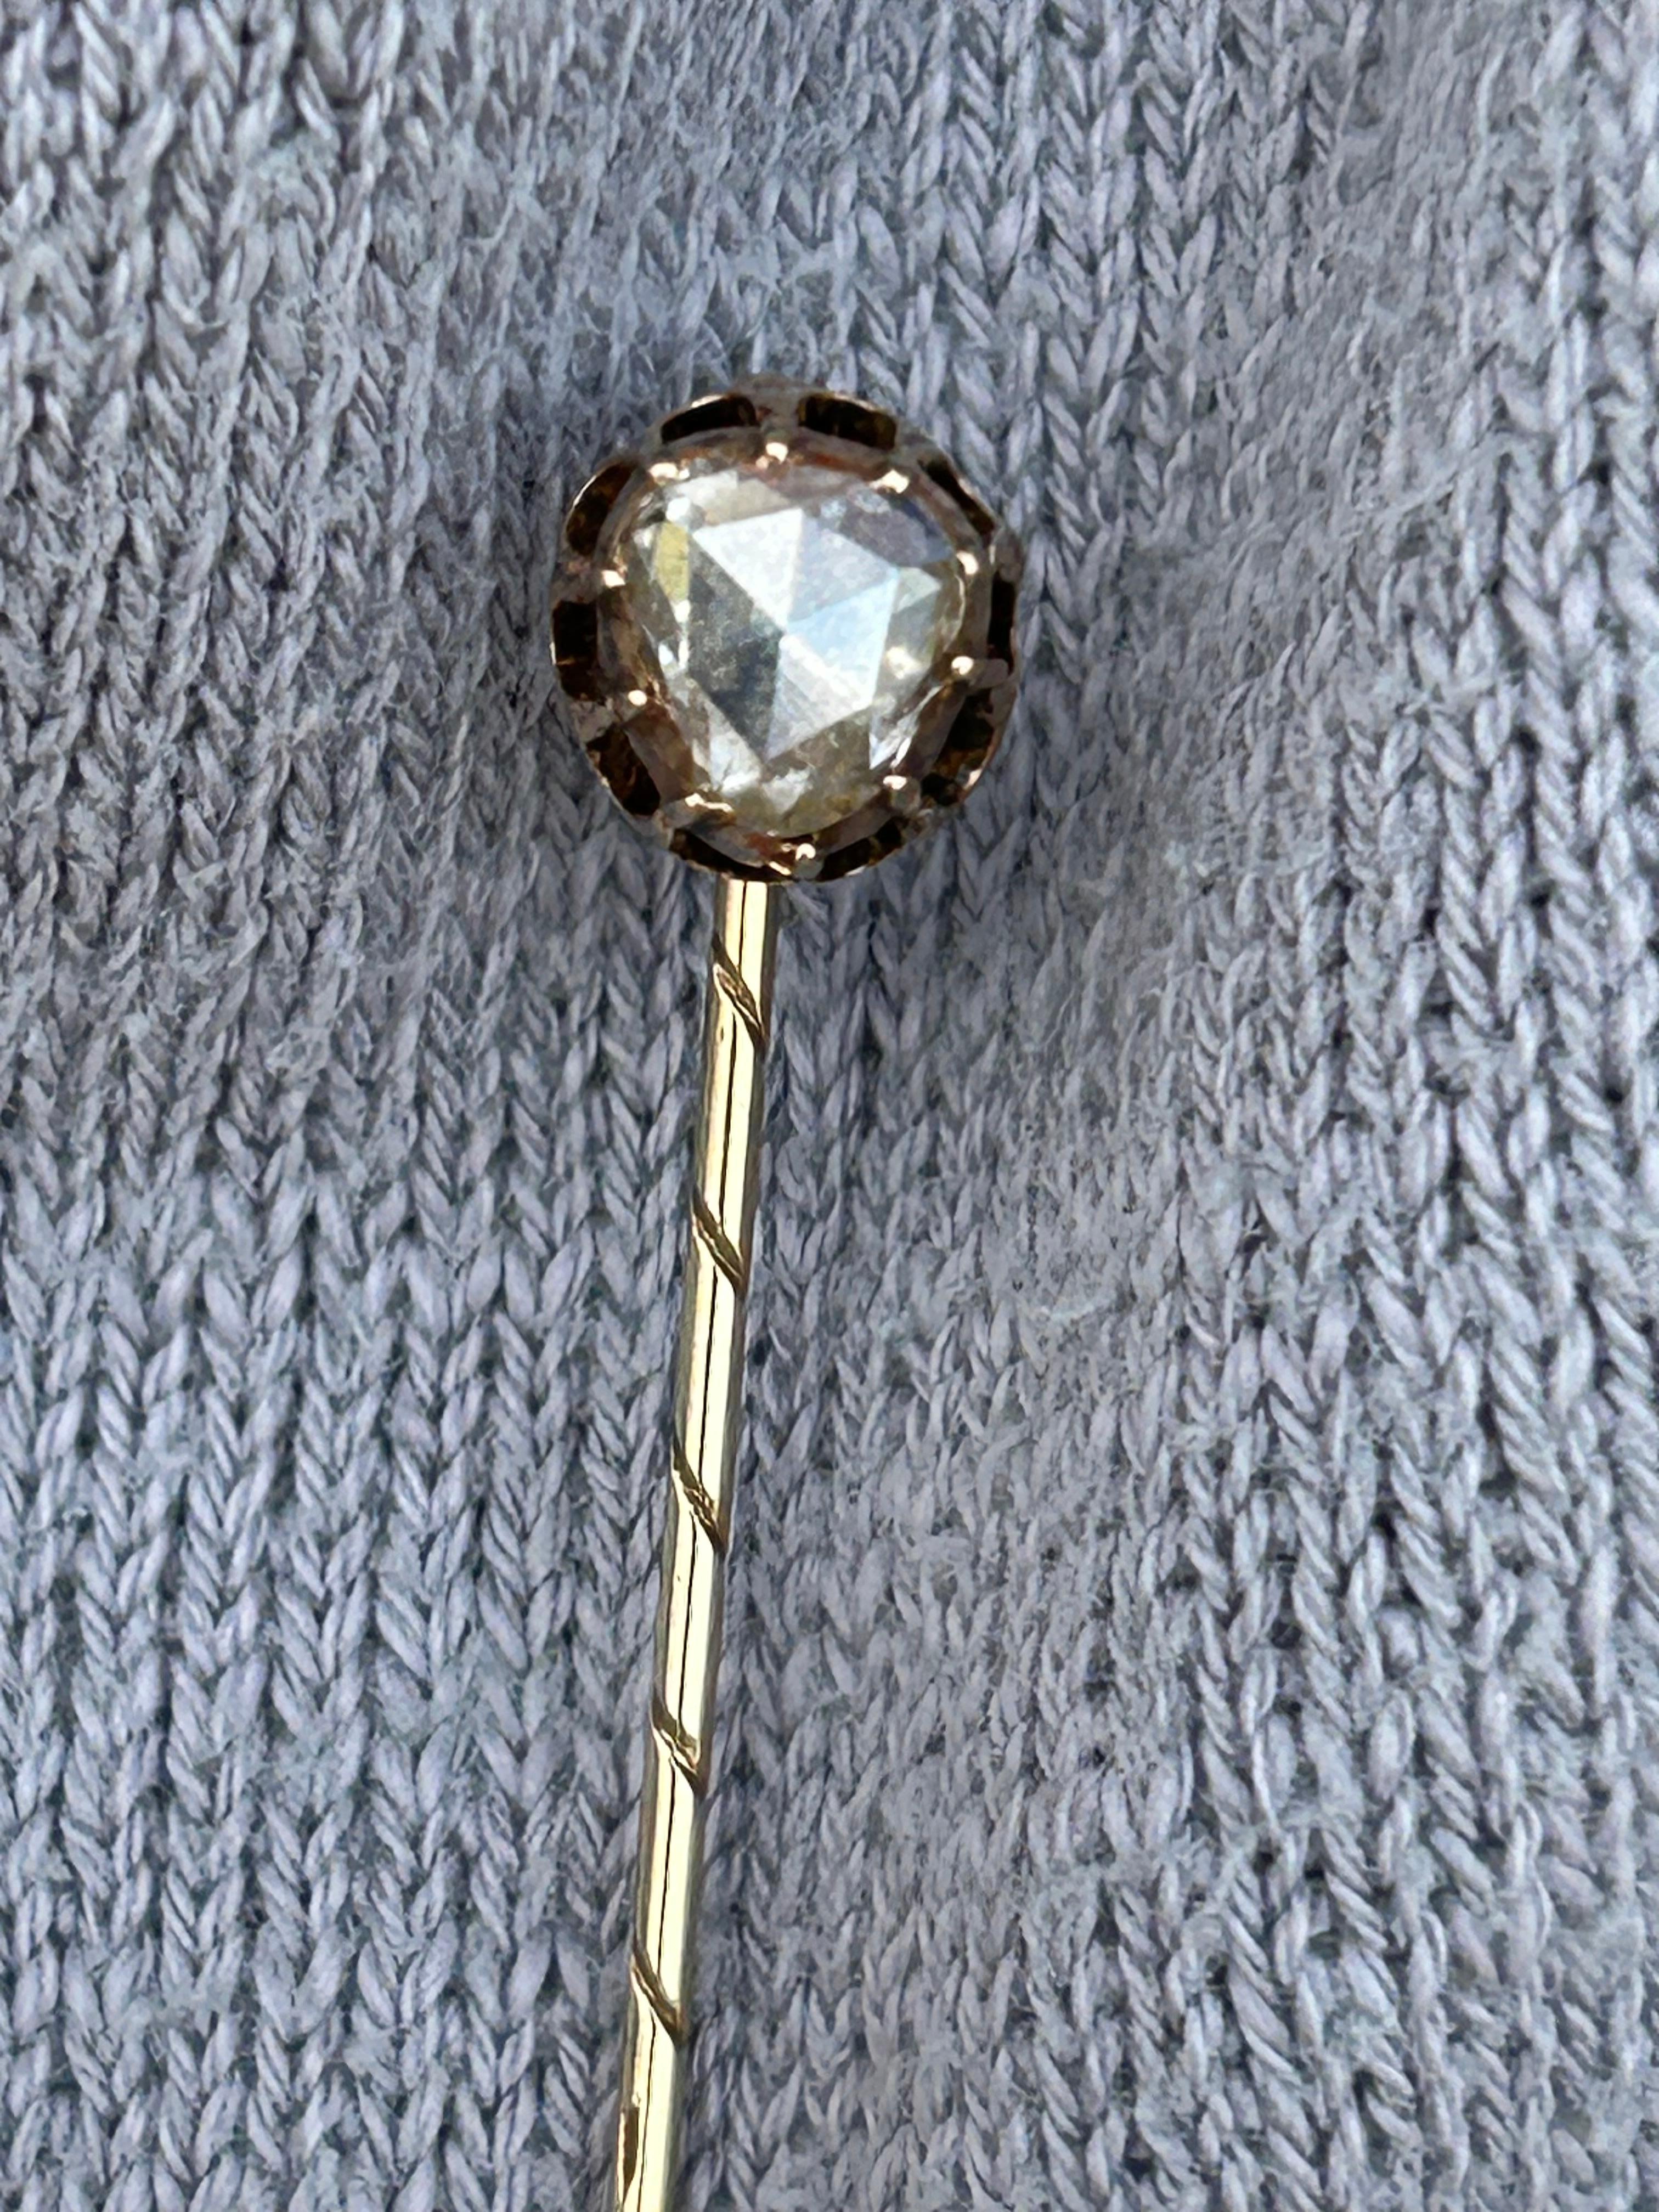 Victorian Pear Rose Cut diamond stick pin.
Diamond 5.9 mm x 5.2 mm
LxW: 6.5 centimeters x .08 cm.
1.72 grams